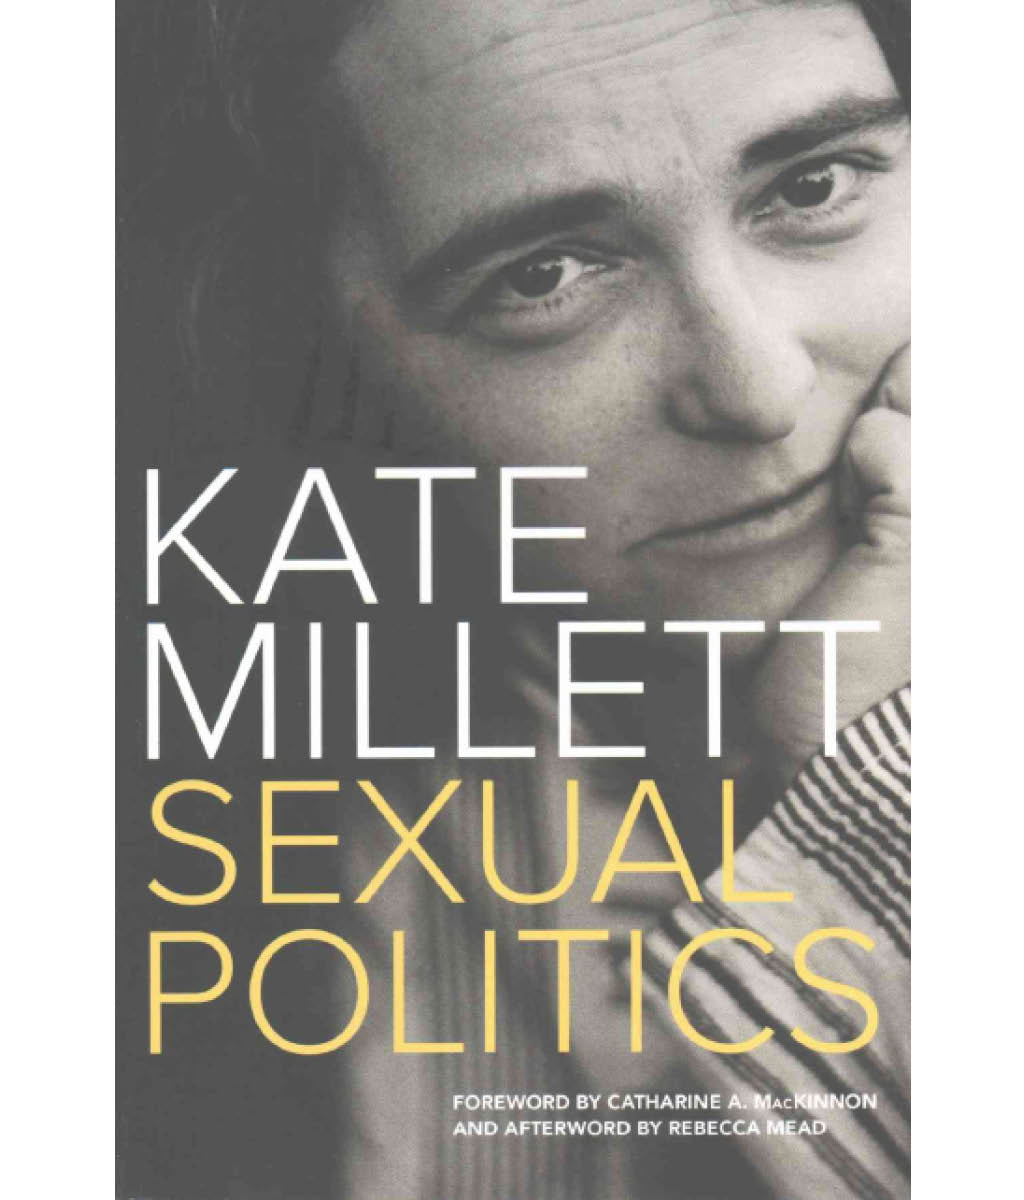 Sexual Politics  by Kate Millett